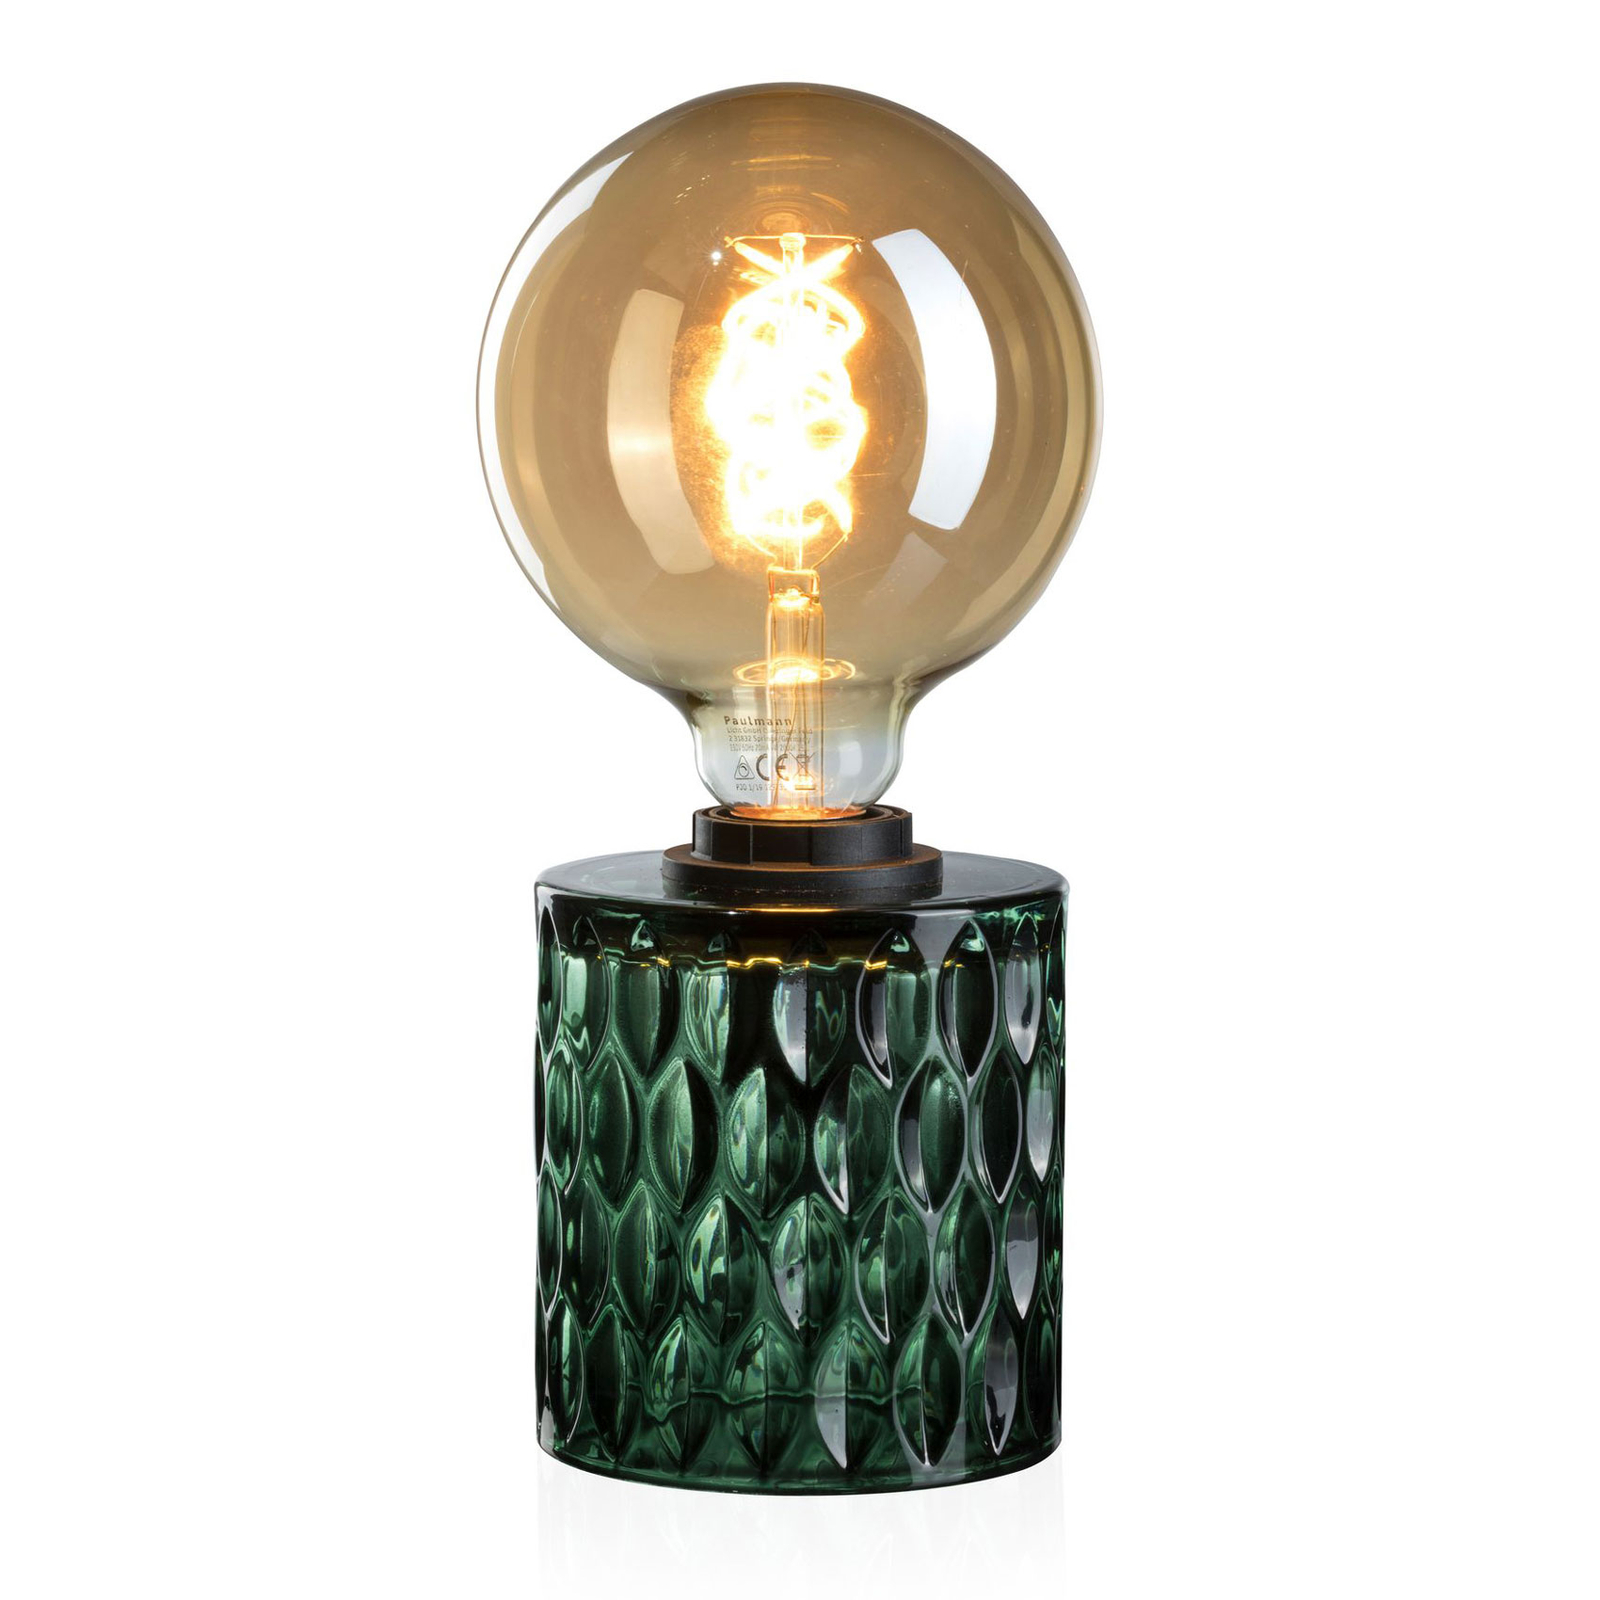 Pauleen Crystal Magic stolní lampa, zelené sklo